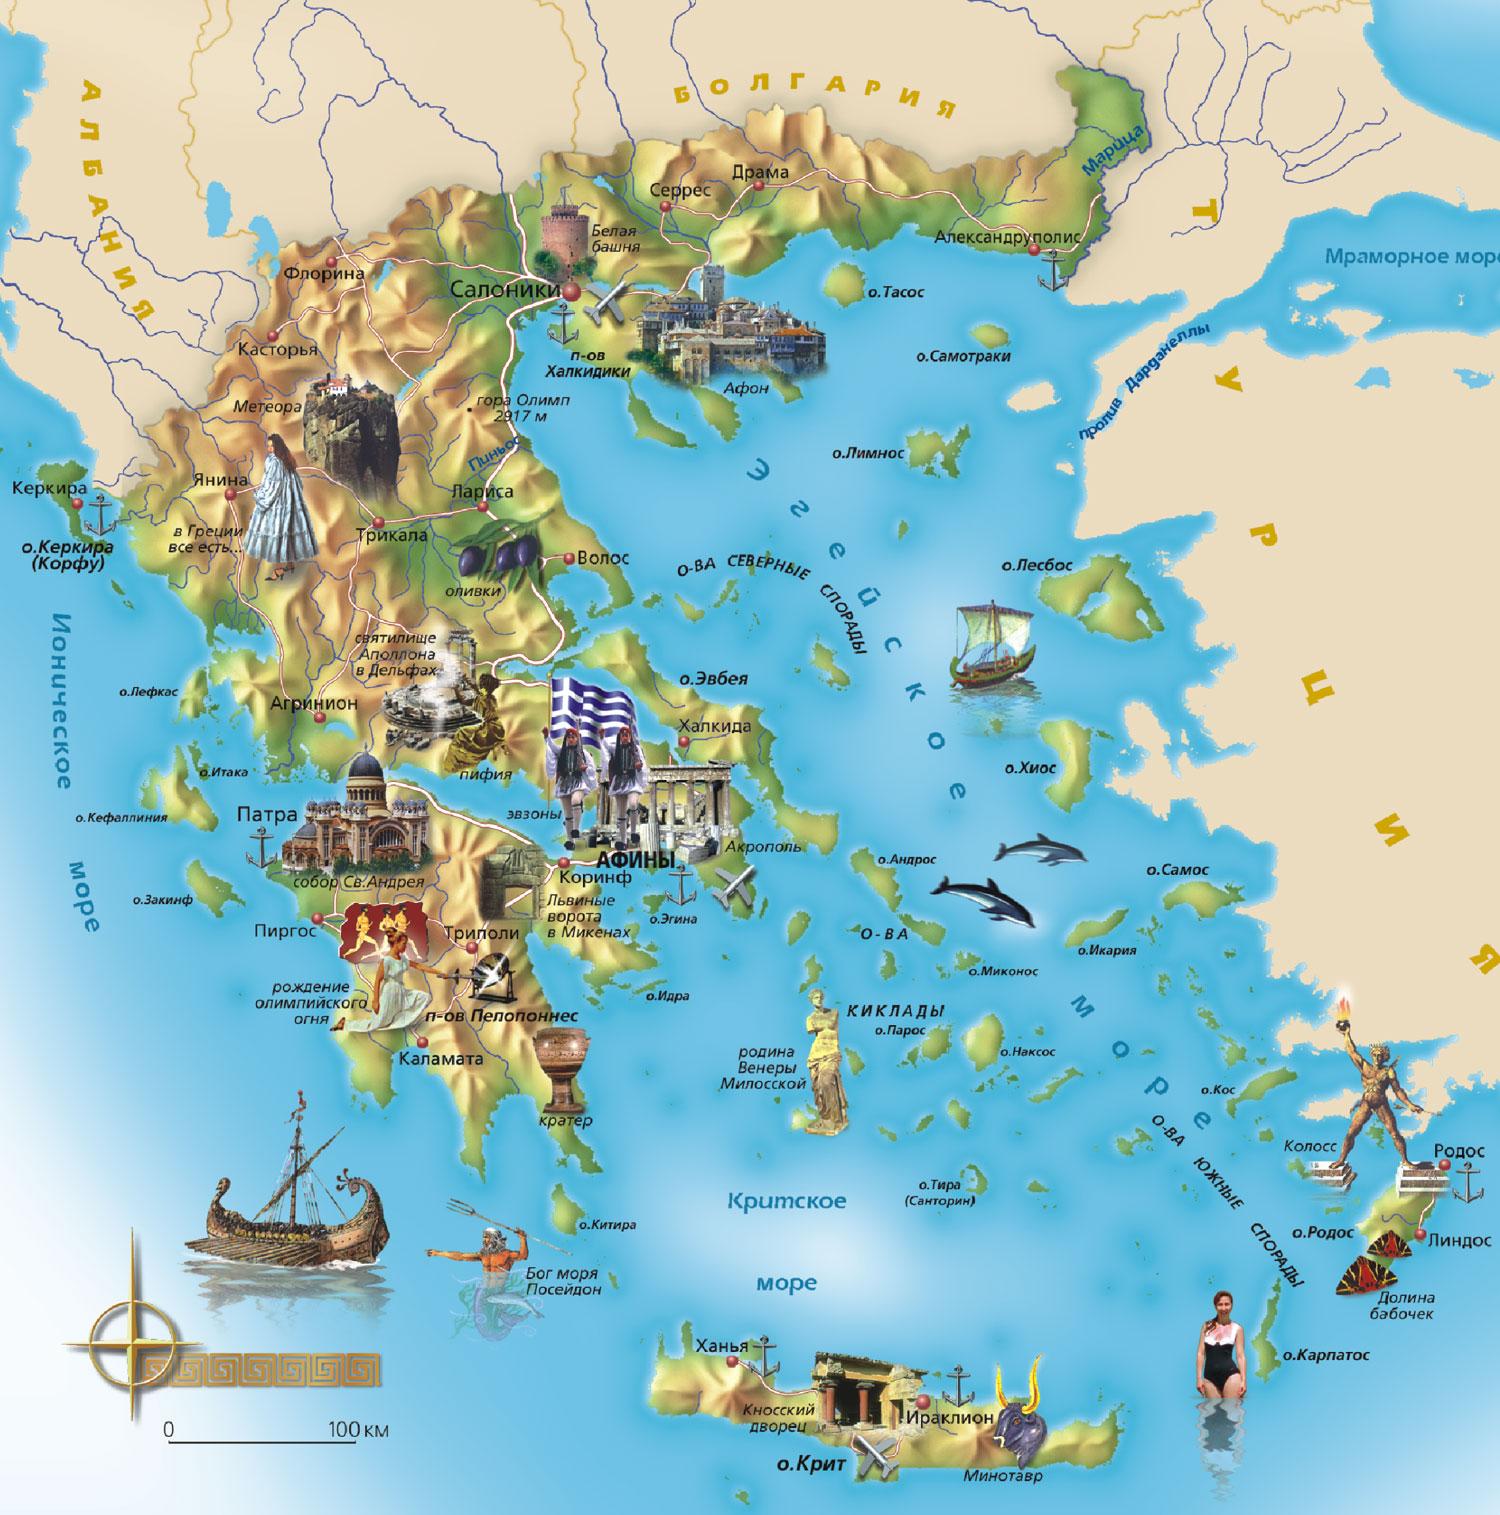 Peloponnese – The Historical Peninsula